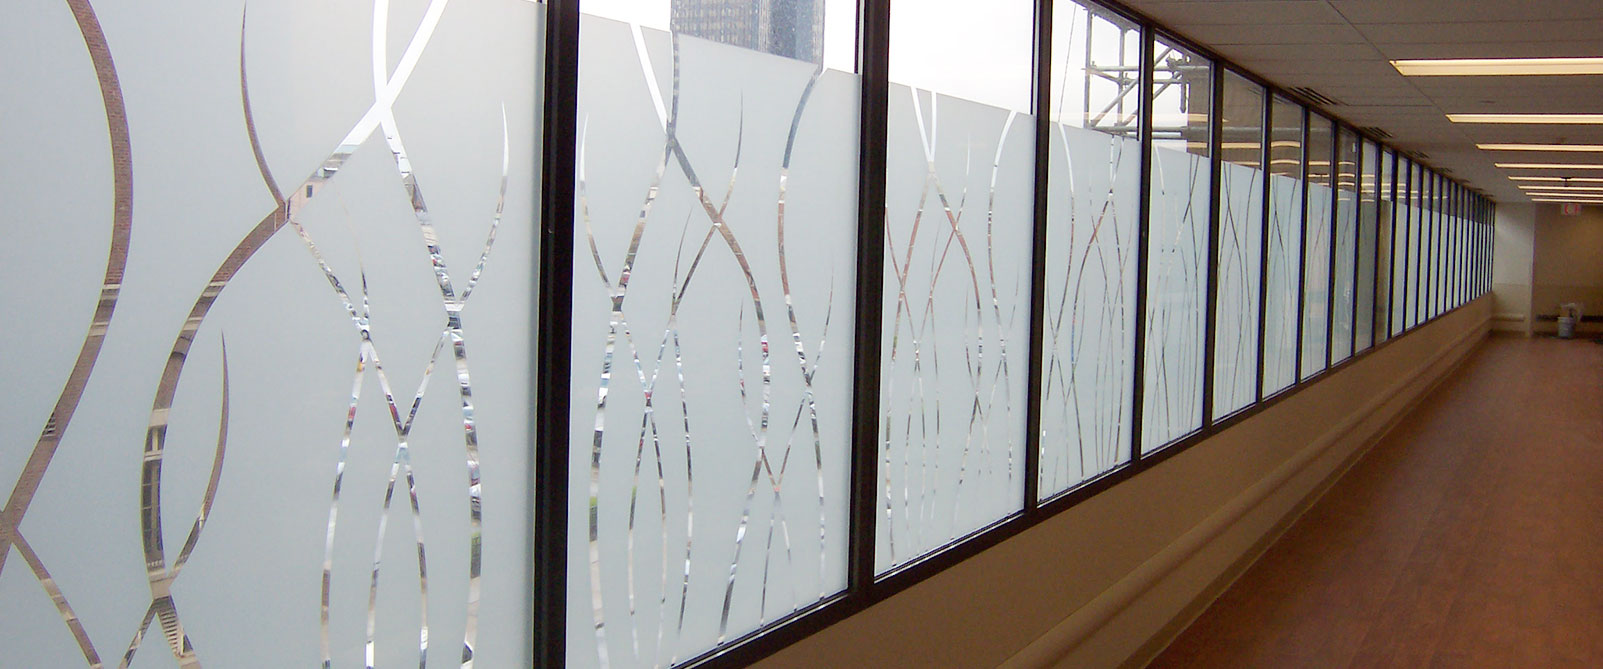 Decorative Window Film | RM WINDOWTINT | COLORADO SPRINGS ...
